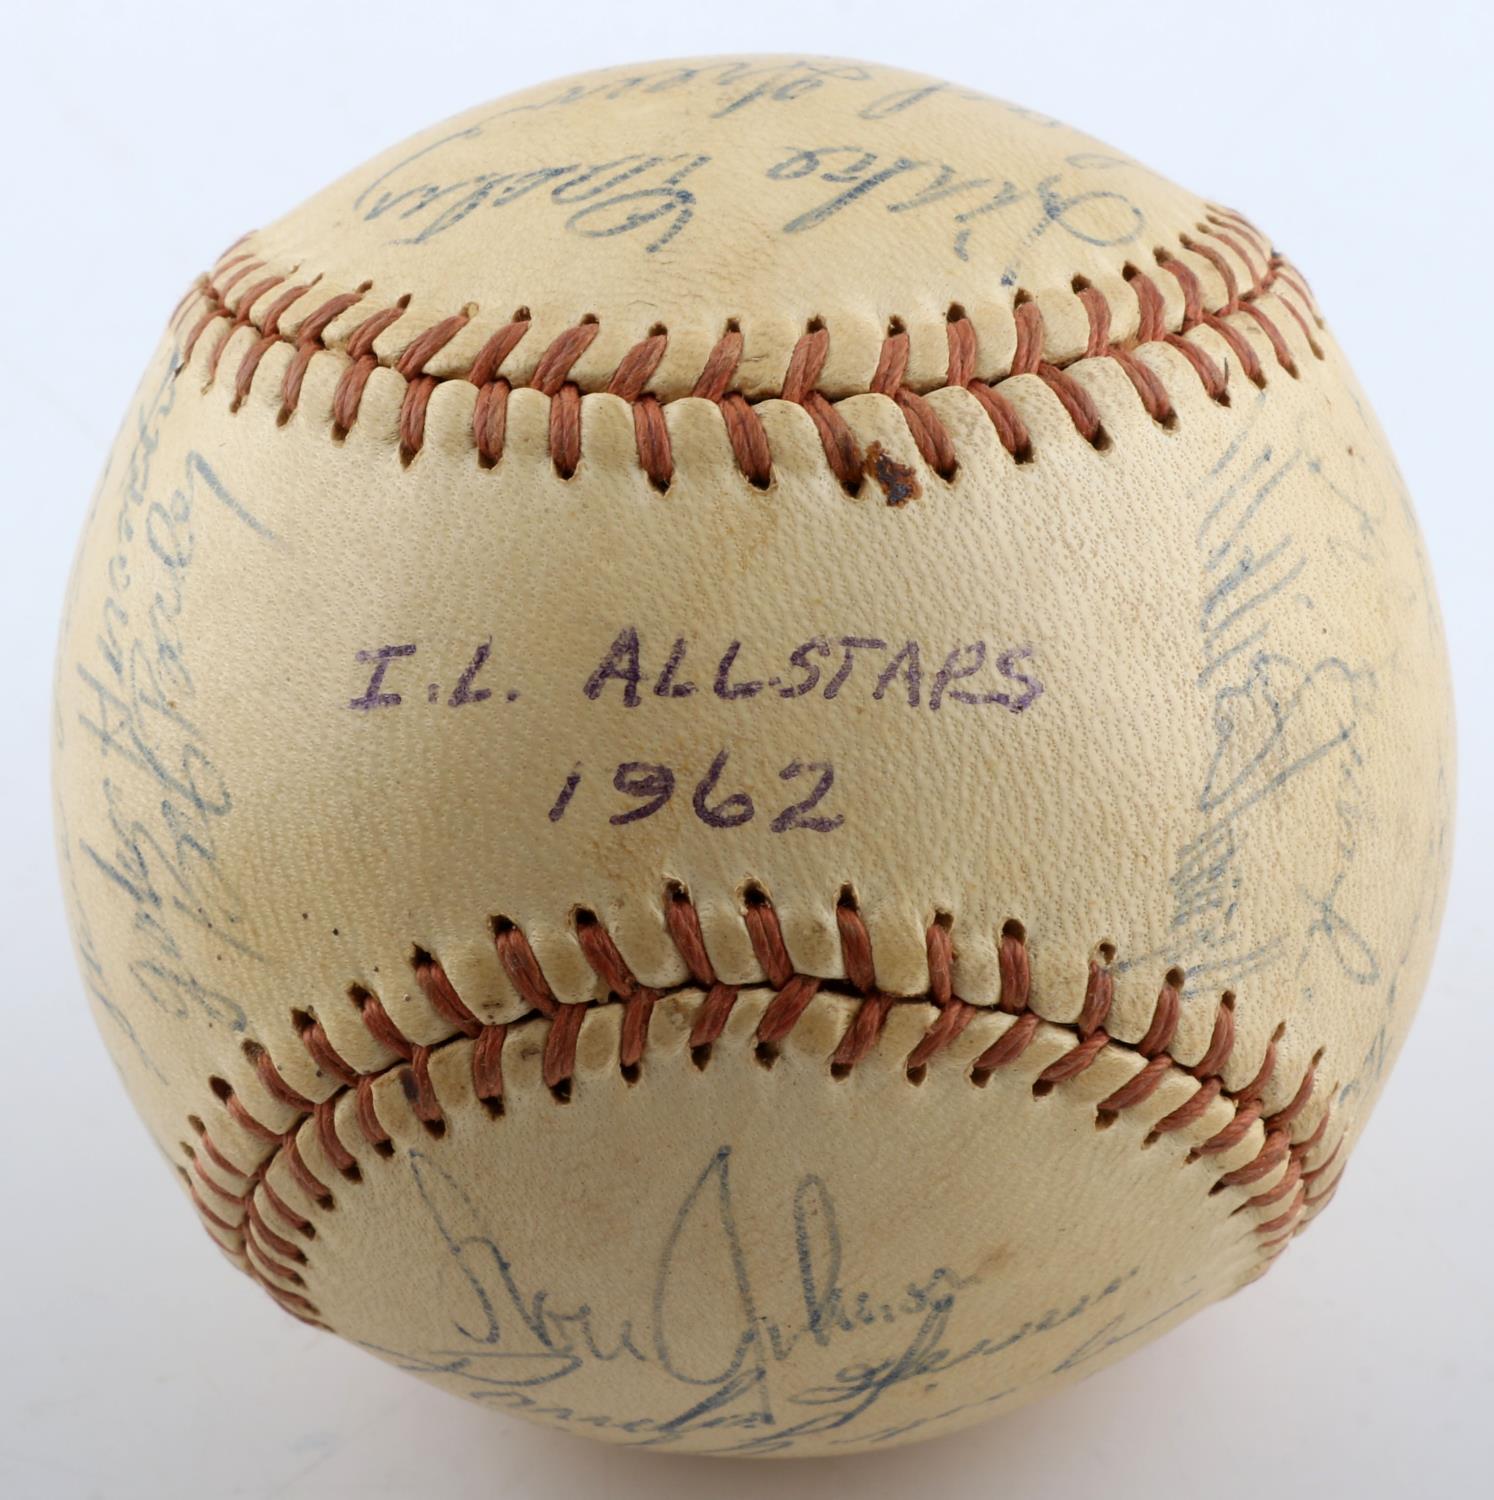 1962 INTERNATIONAL LEAGUE ALLSTARS SIGNED BALL